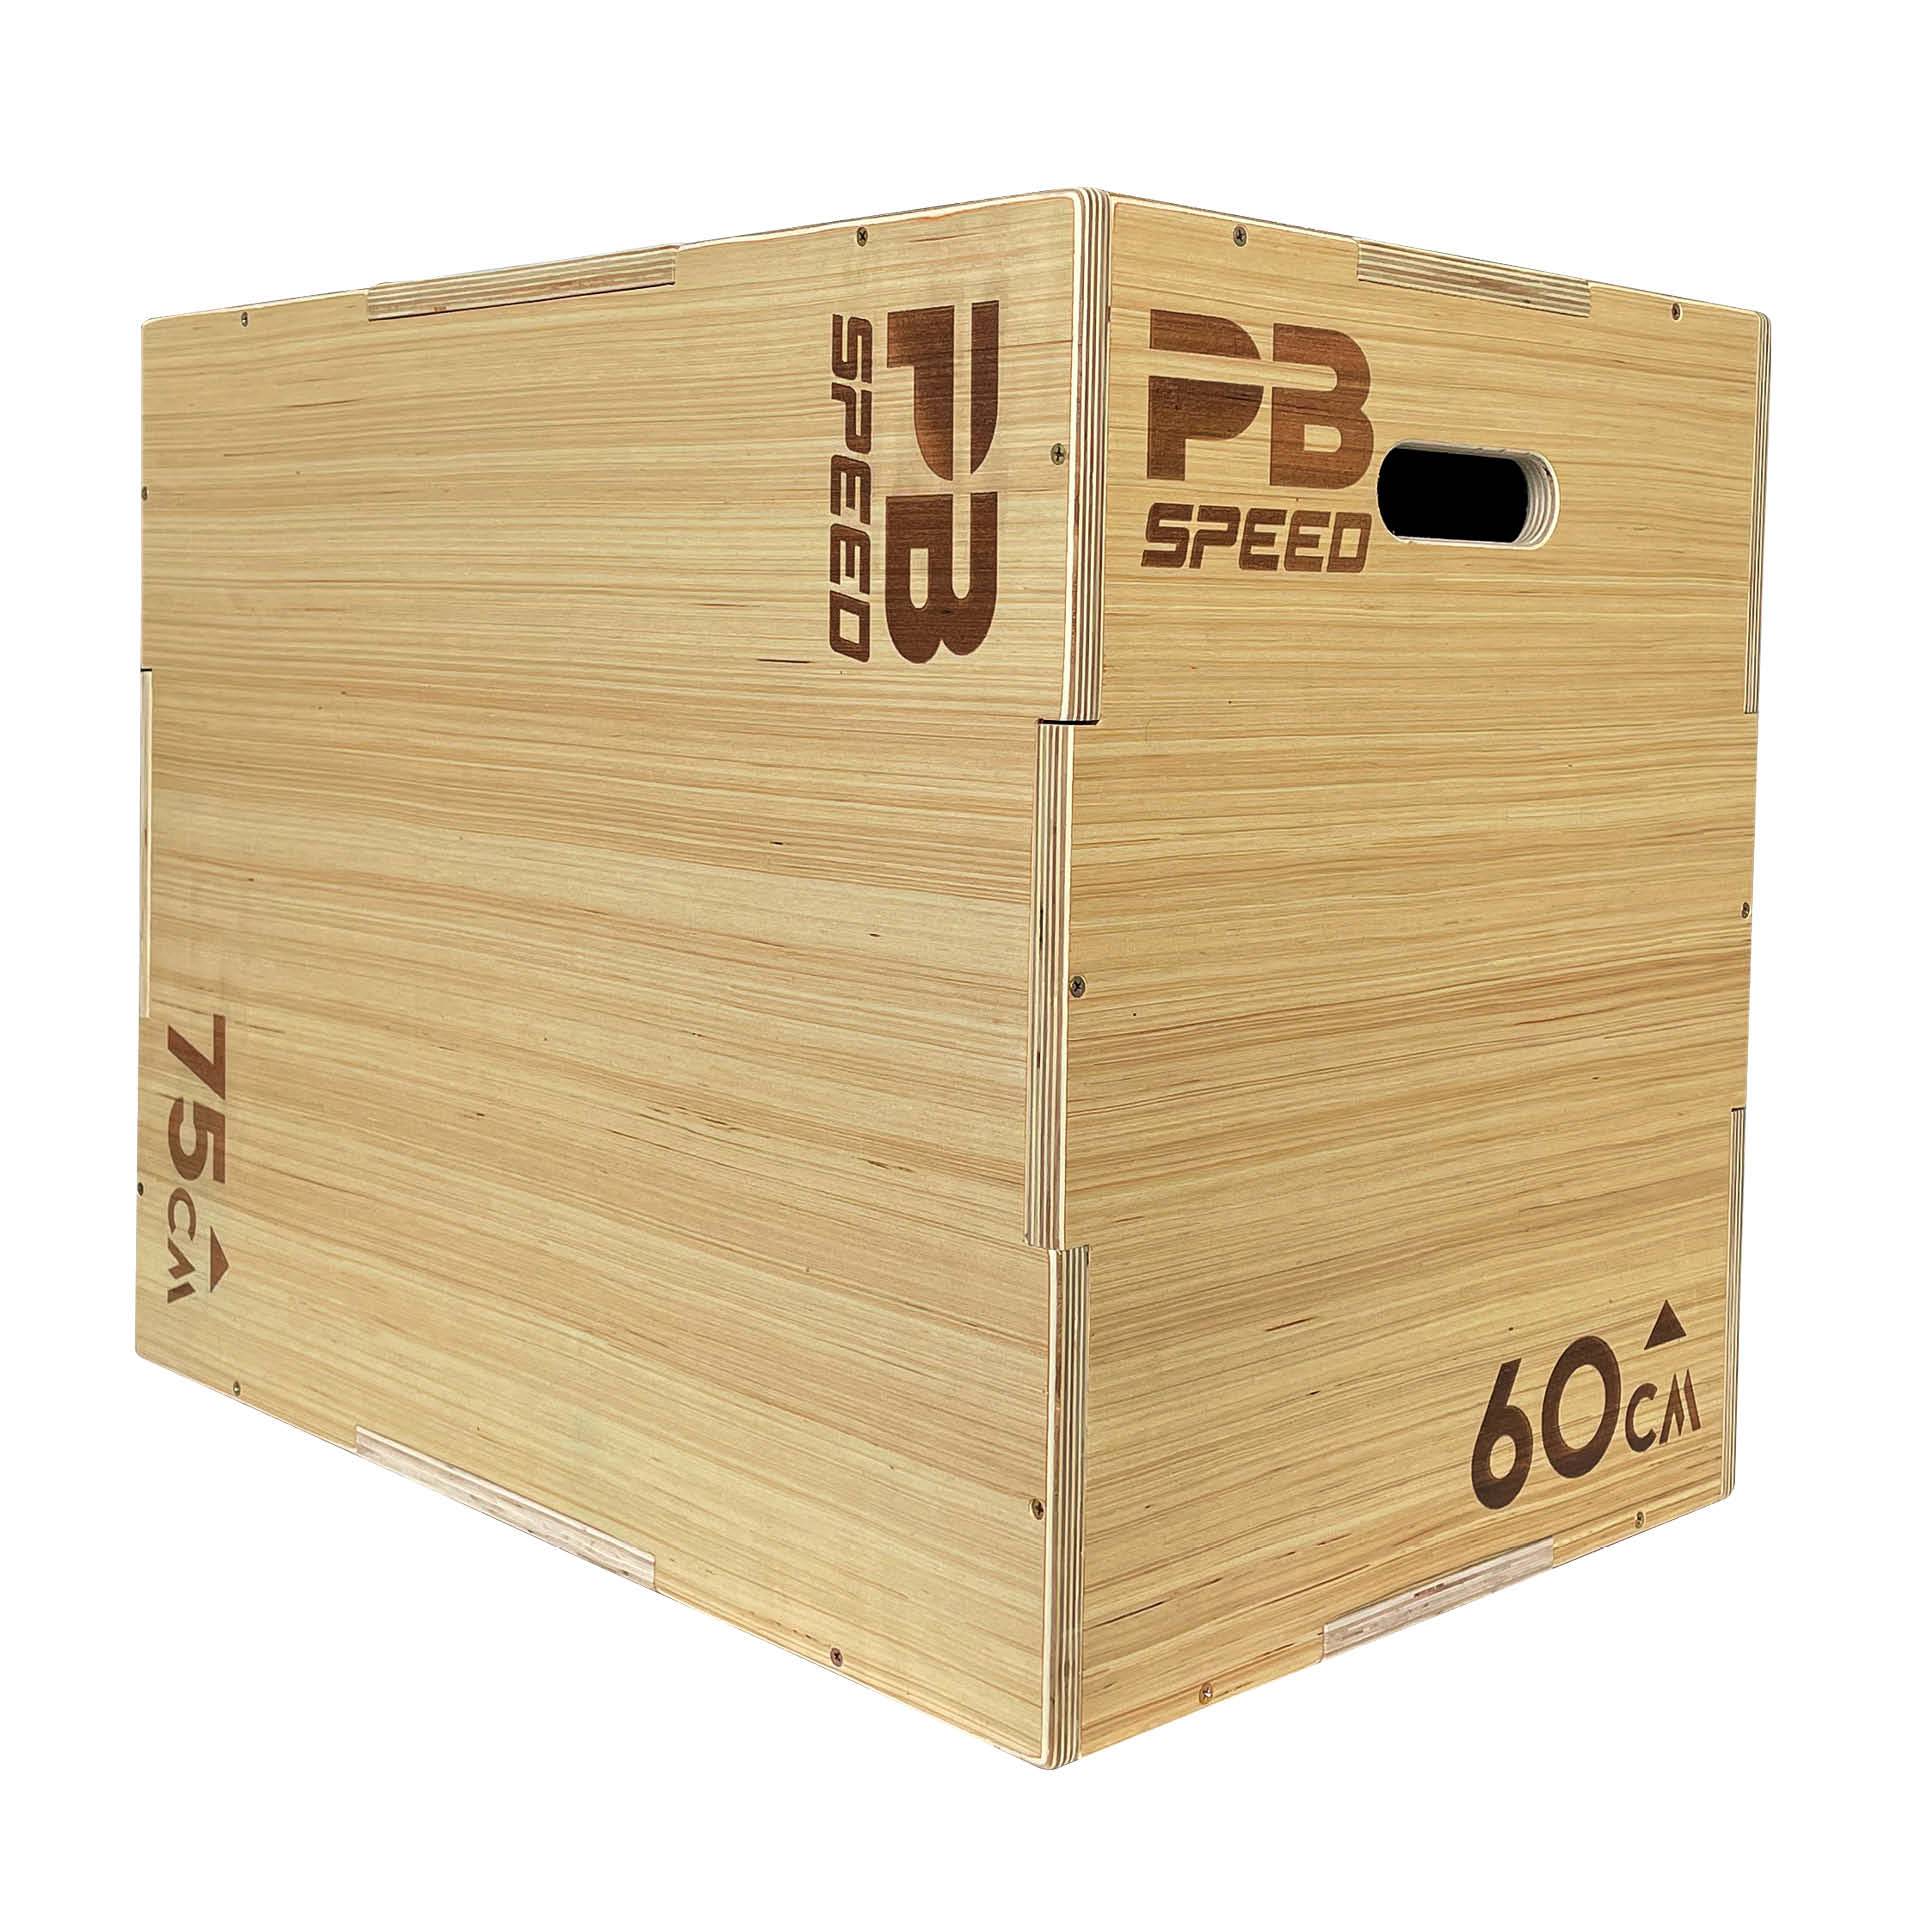 PB Speed Holz Plyo Box von Perform Better